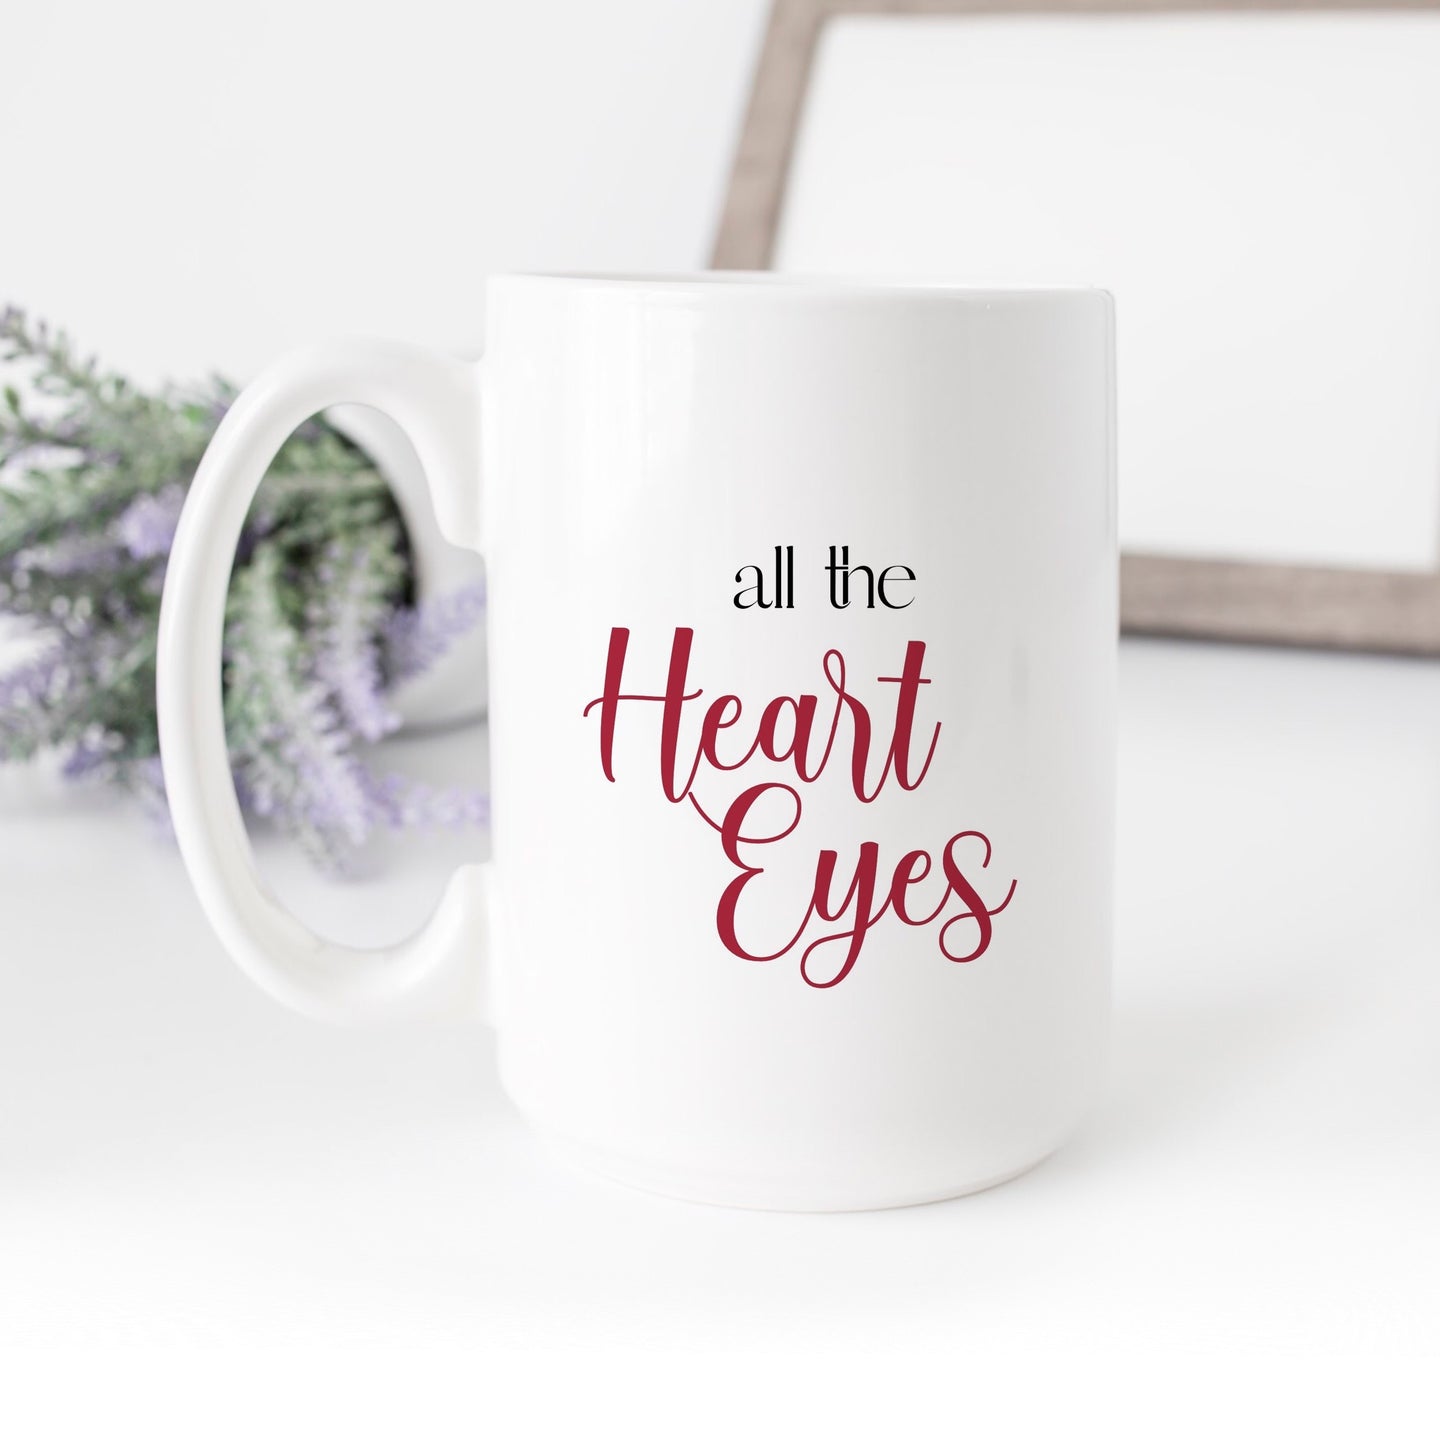 All the Heart Eyes Mug